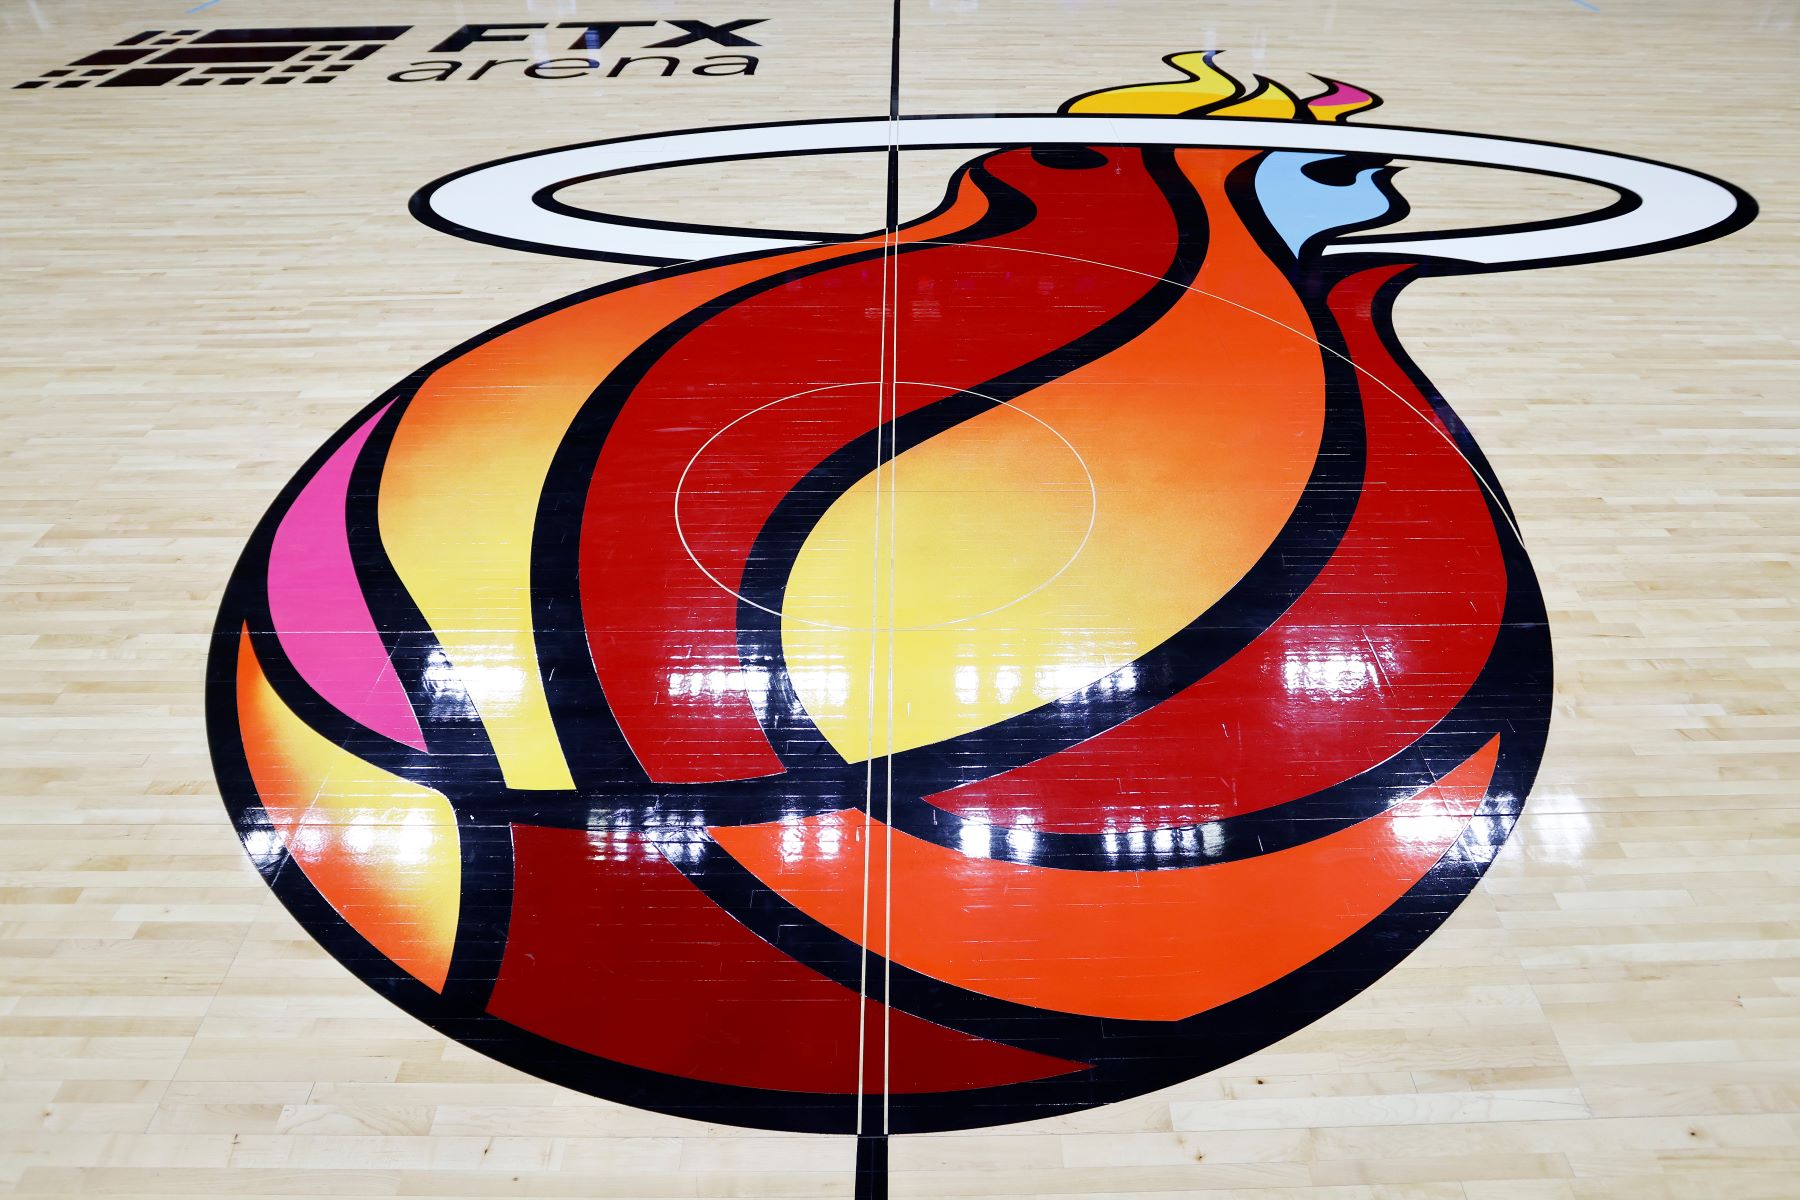 NBA team Miami Heat logo on the court before a game against the Milwaukee Bucks